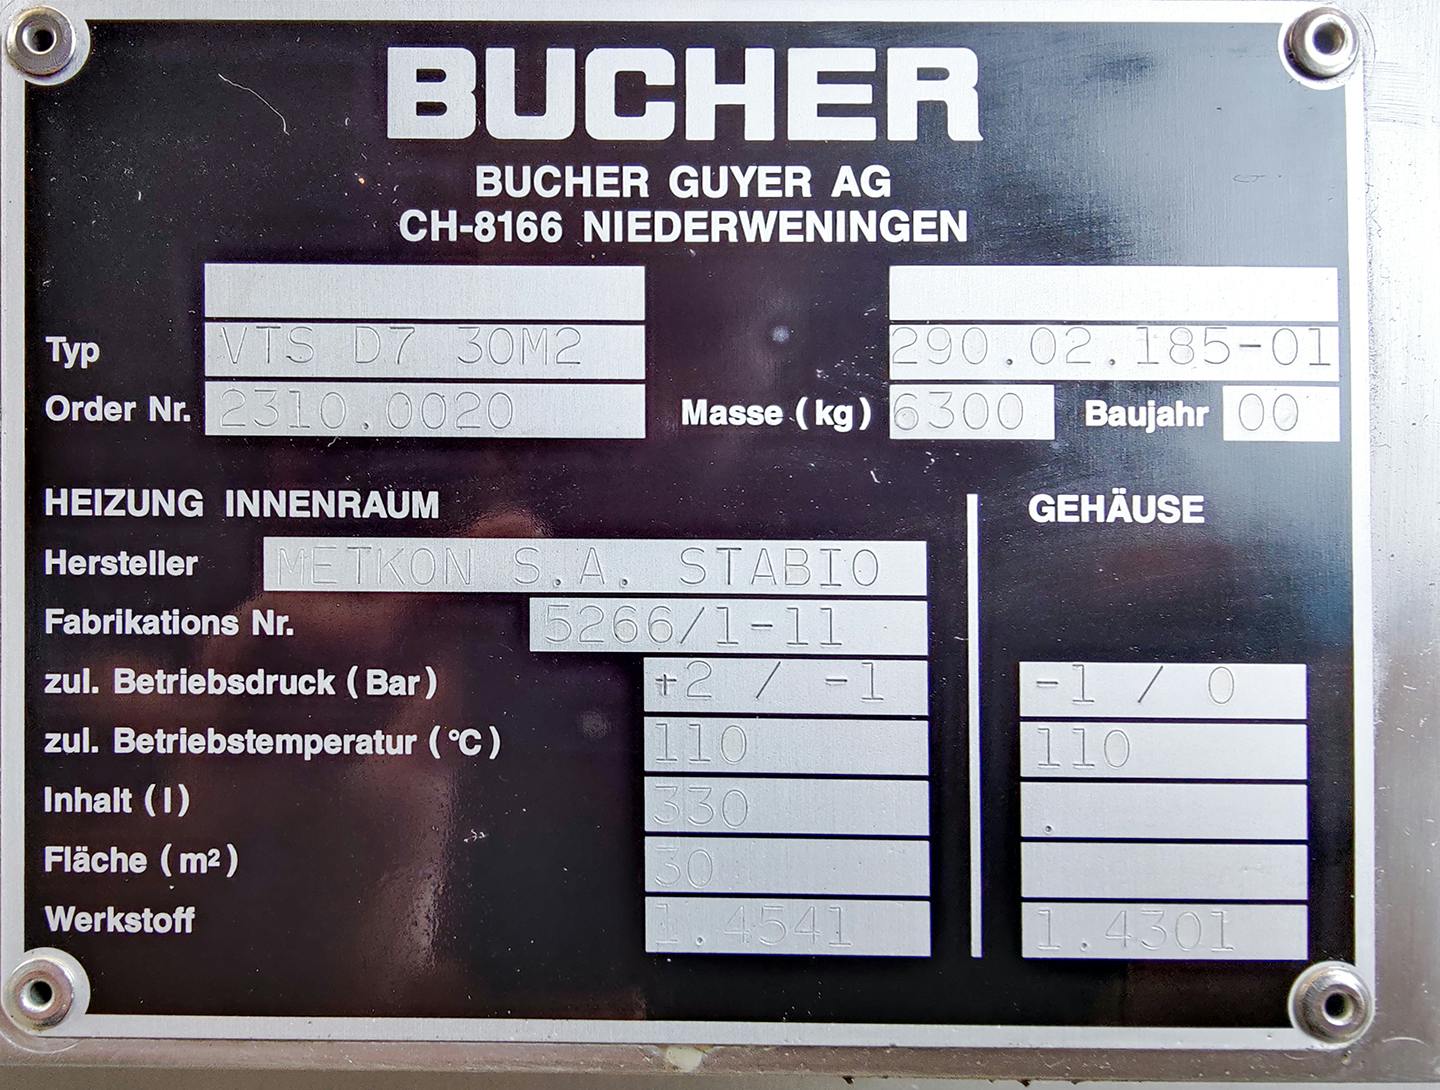 Bucher VTS-D7 30m2 - Trockenschrank - image 8